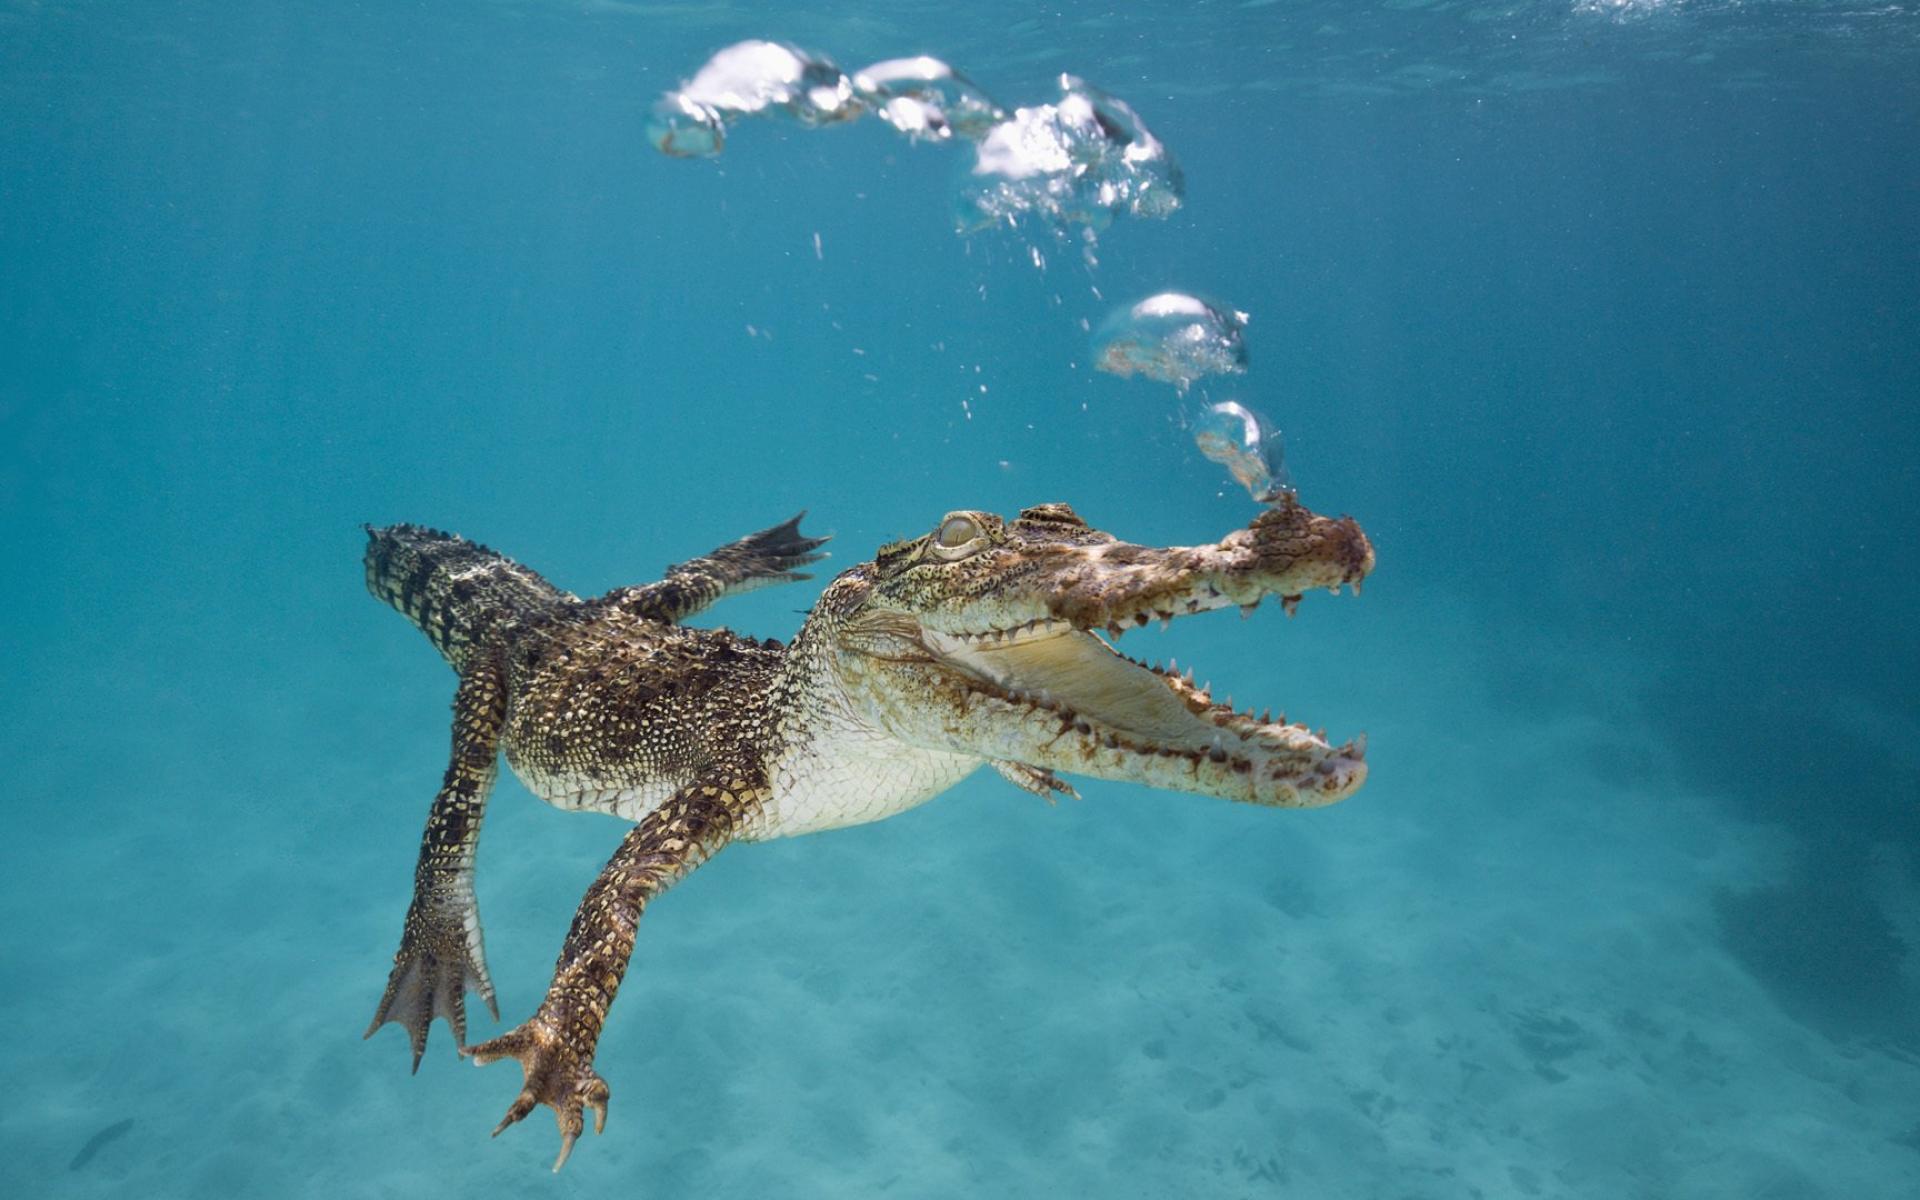 Small crocodile under water